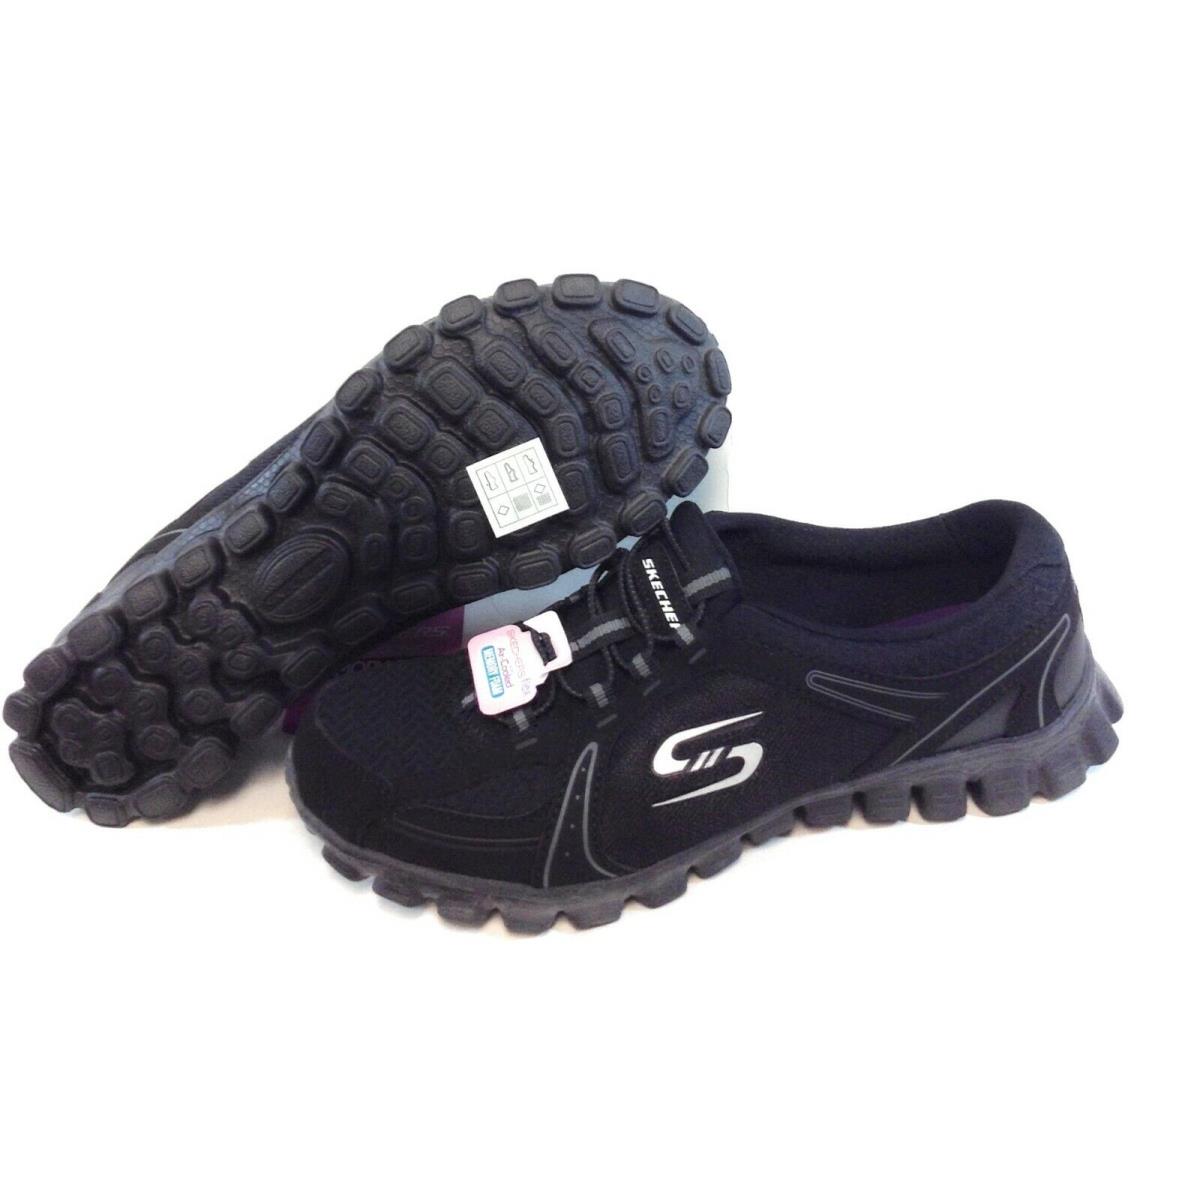 Womens Skechers 22698 Blk EZ Flex Right On Black Grey Sneakers Shoes